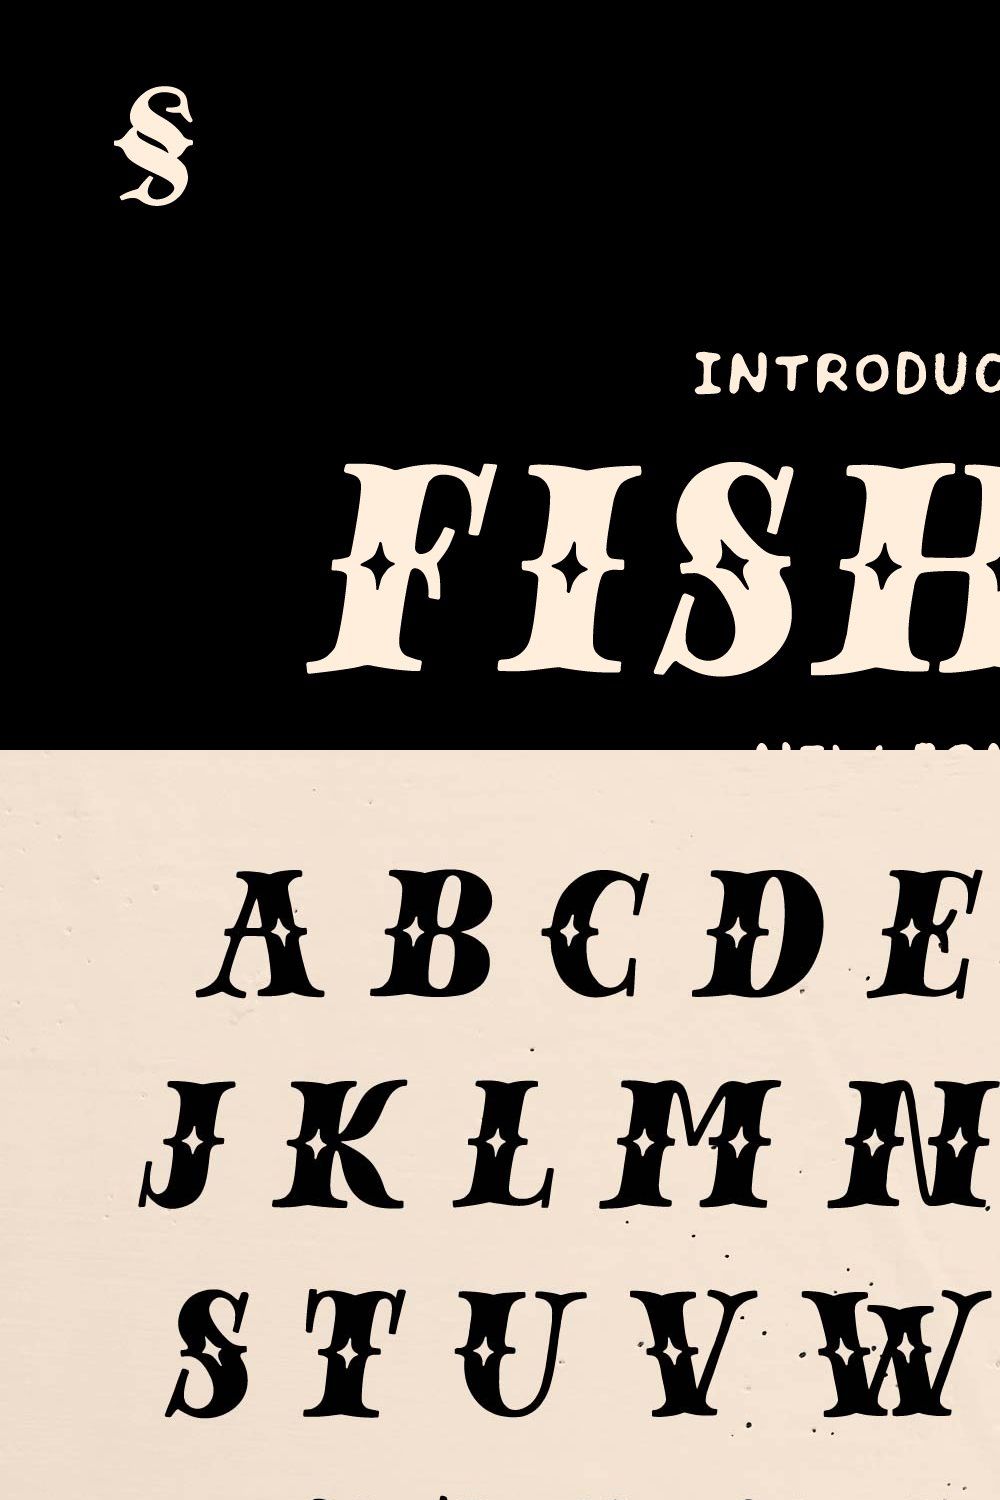 Fisher - Vintage font pinterest preview image.